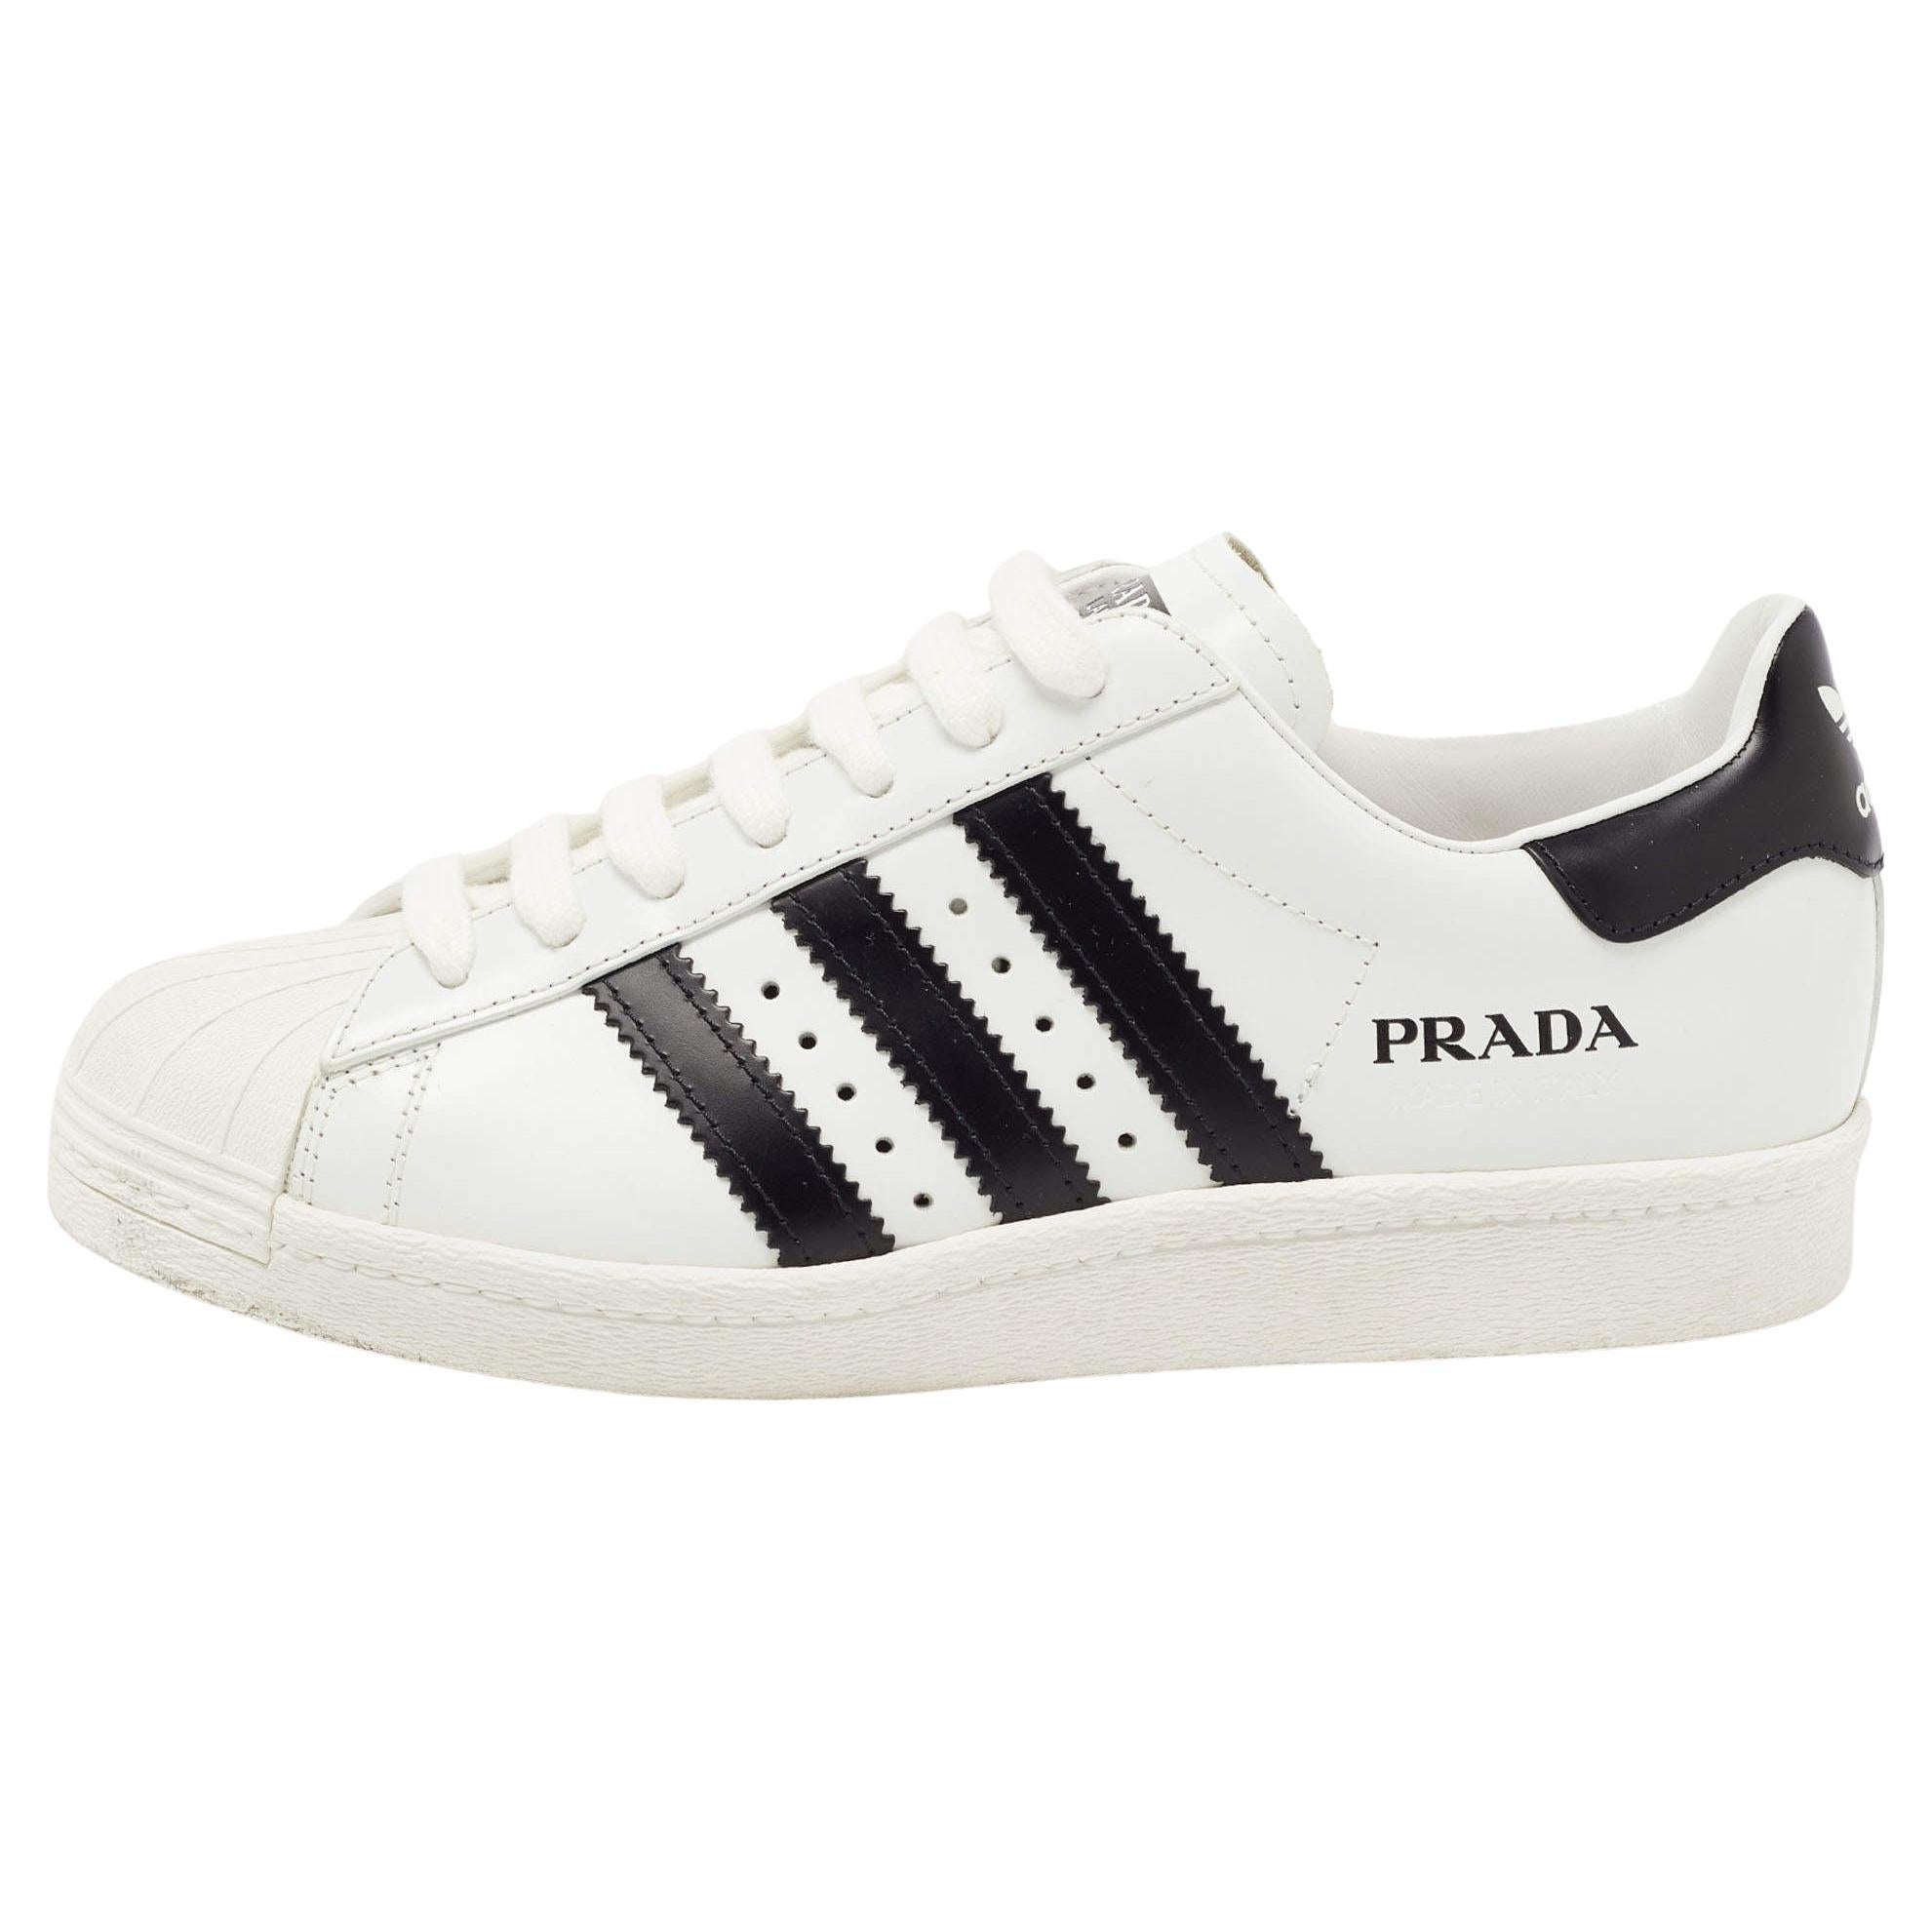 Prada x Adidas White/Black Leather Superstar Sneakers Size 37 1/3